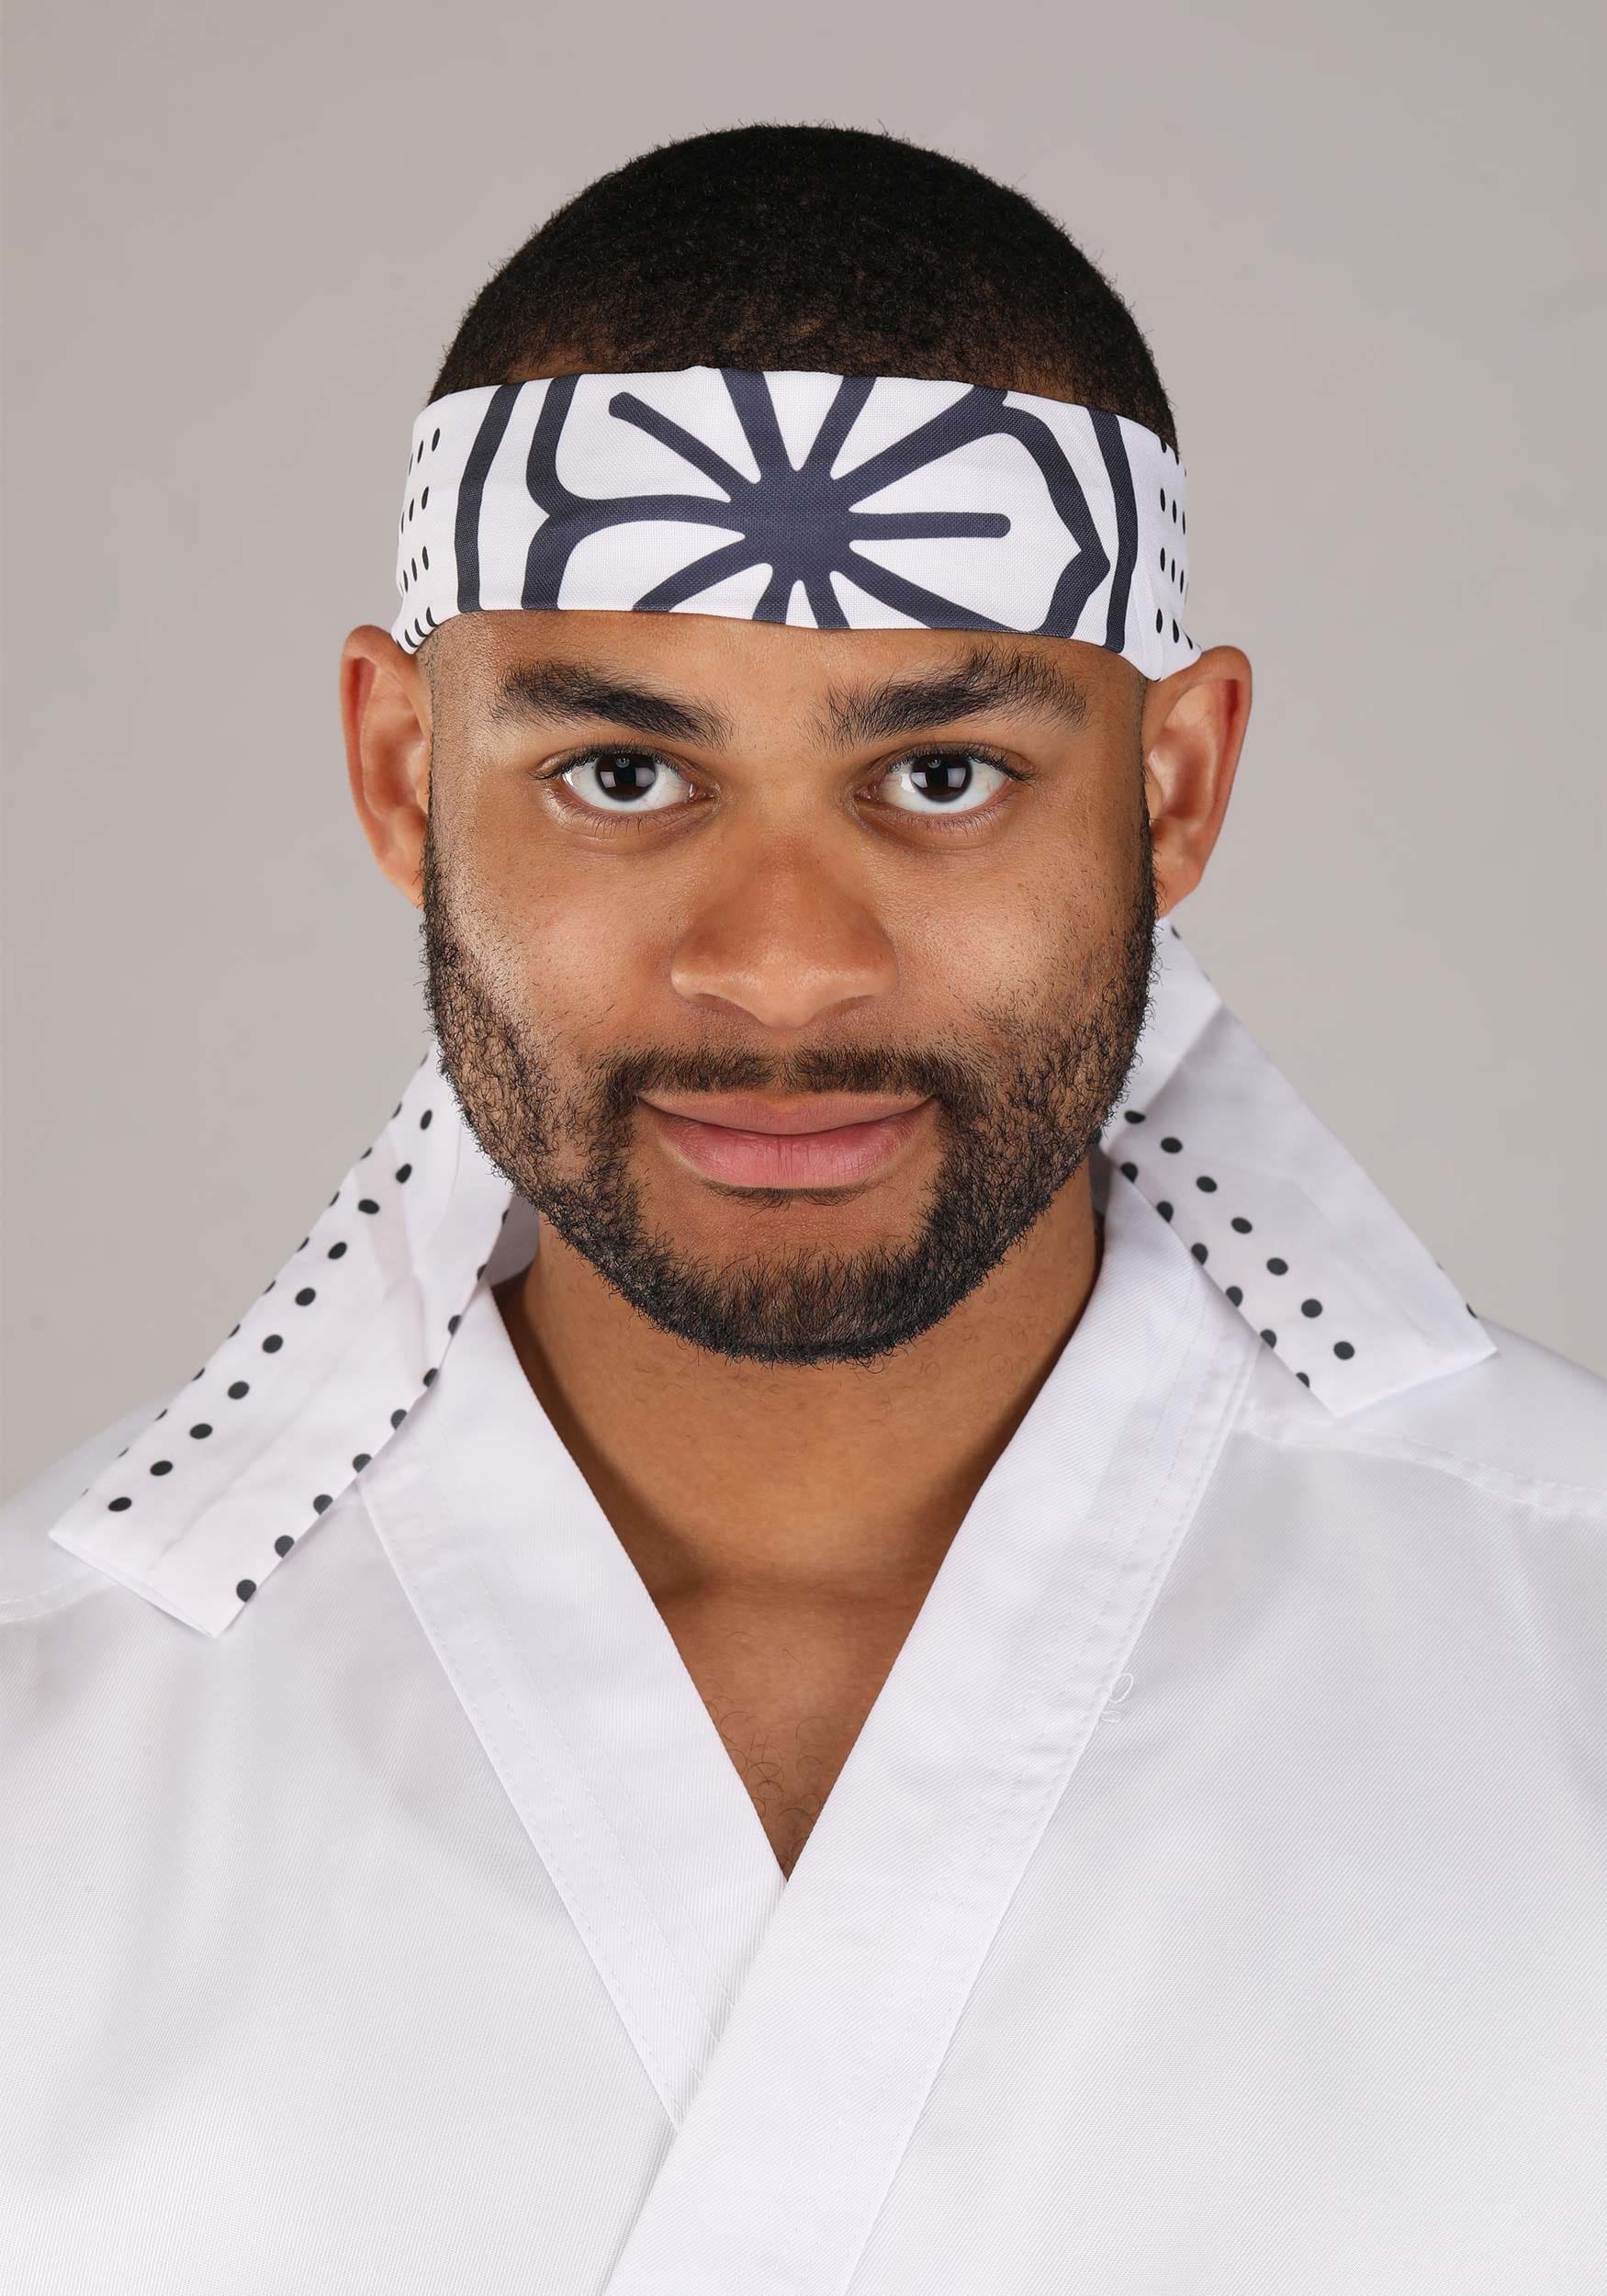 Karate Kid Daniel San Costume